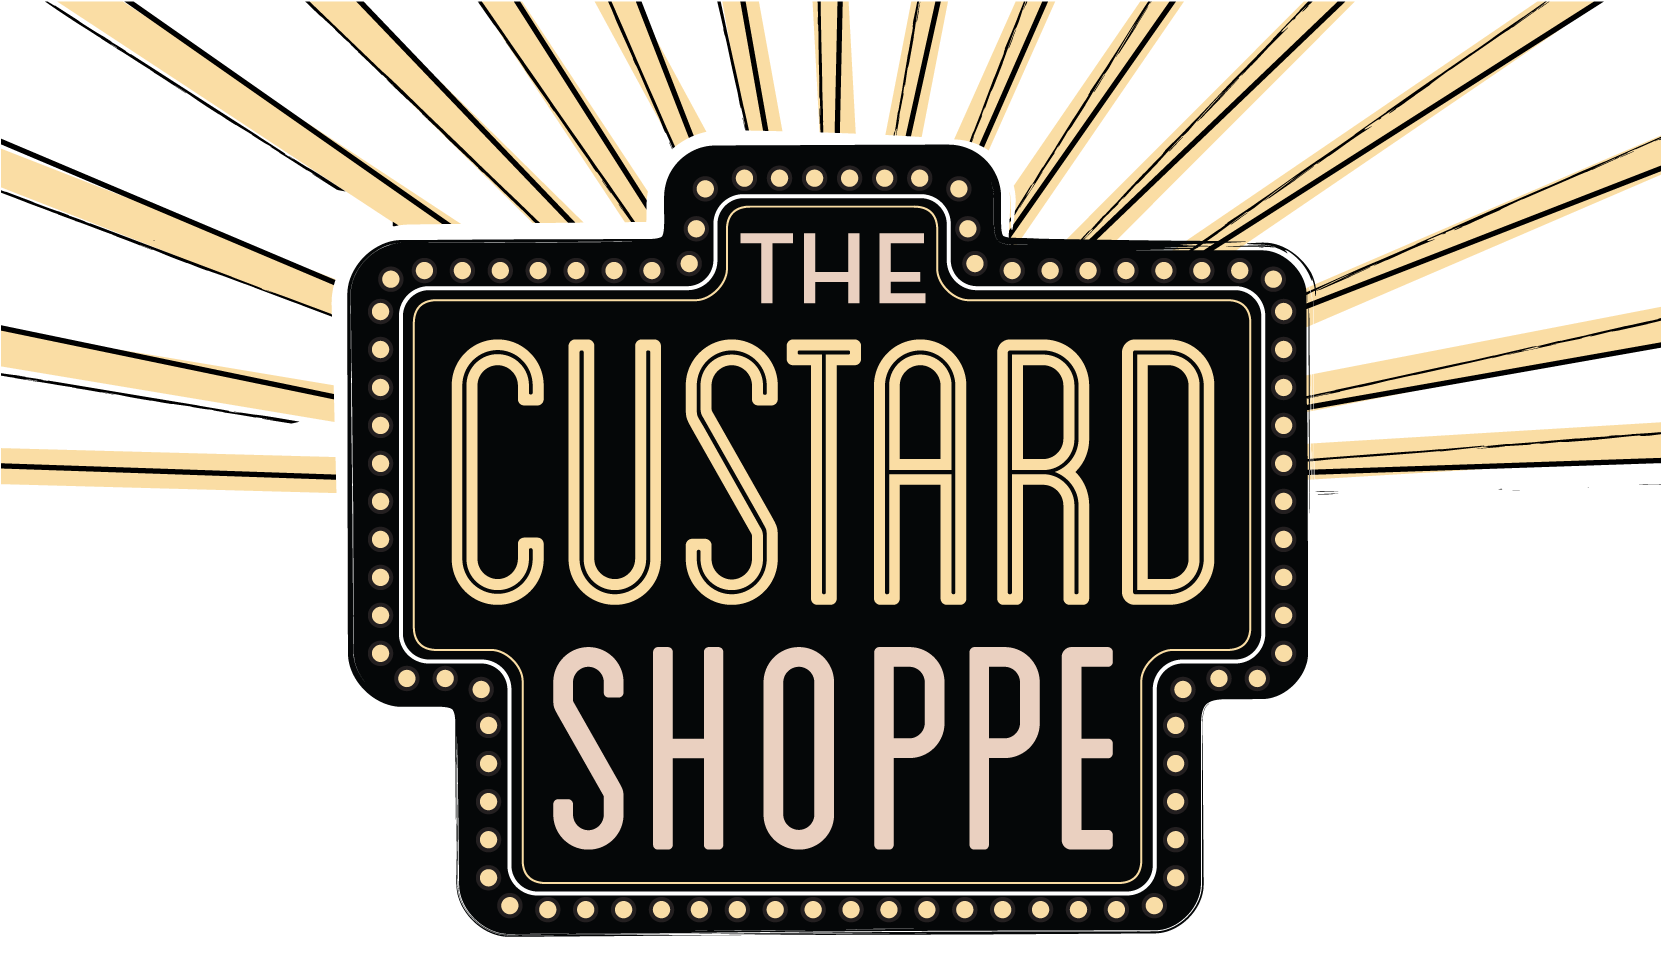 The Custard Shoppe Signage PNG